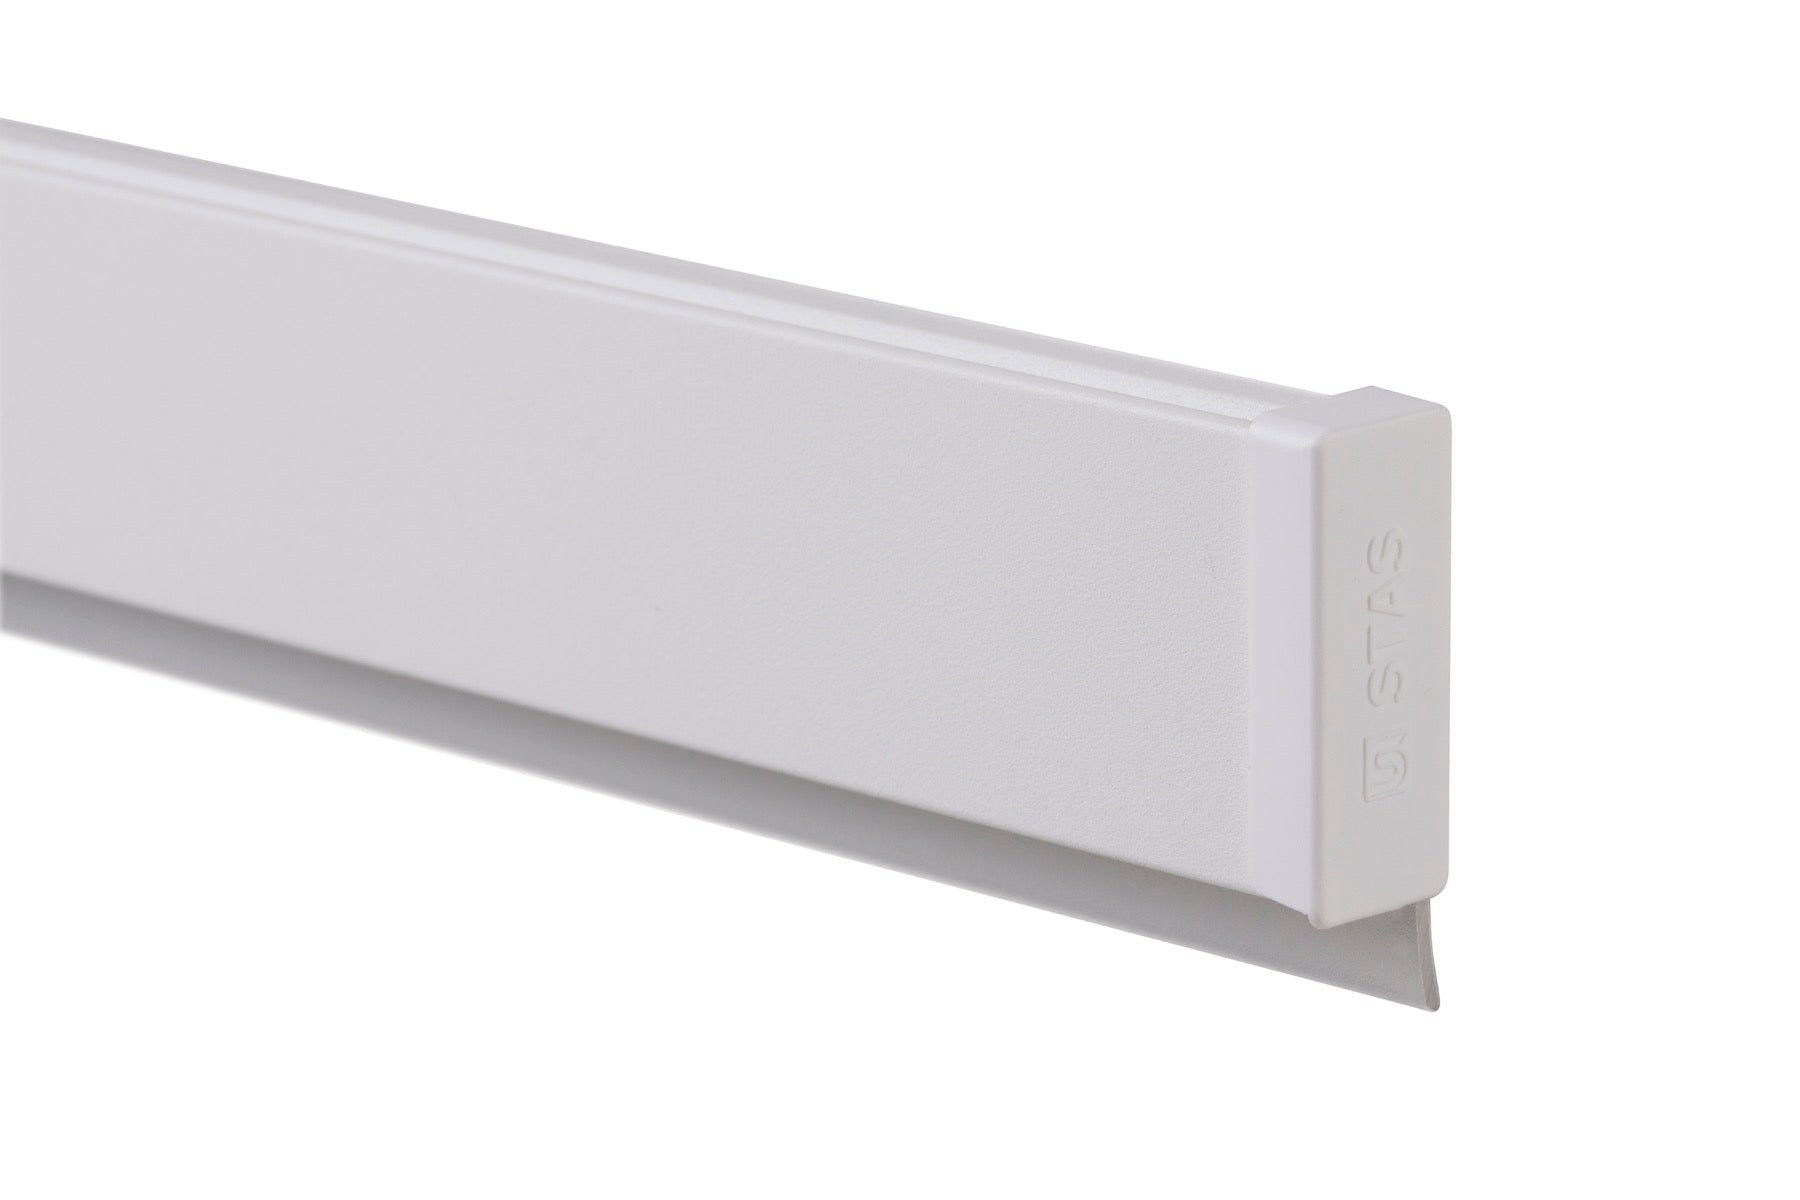 Papergrip rail: POS15 - Papergrip rail, 1.5m grey